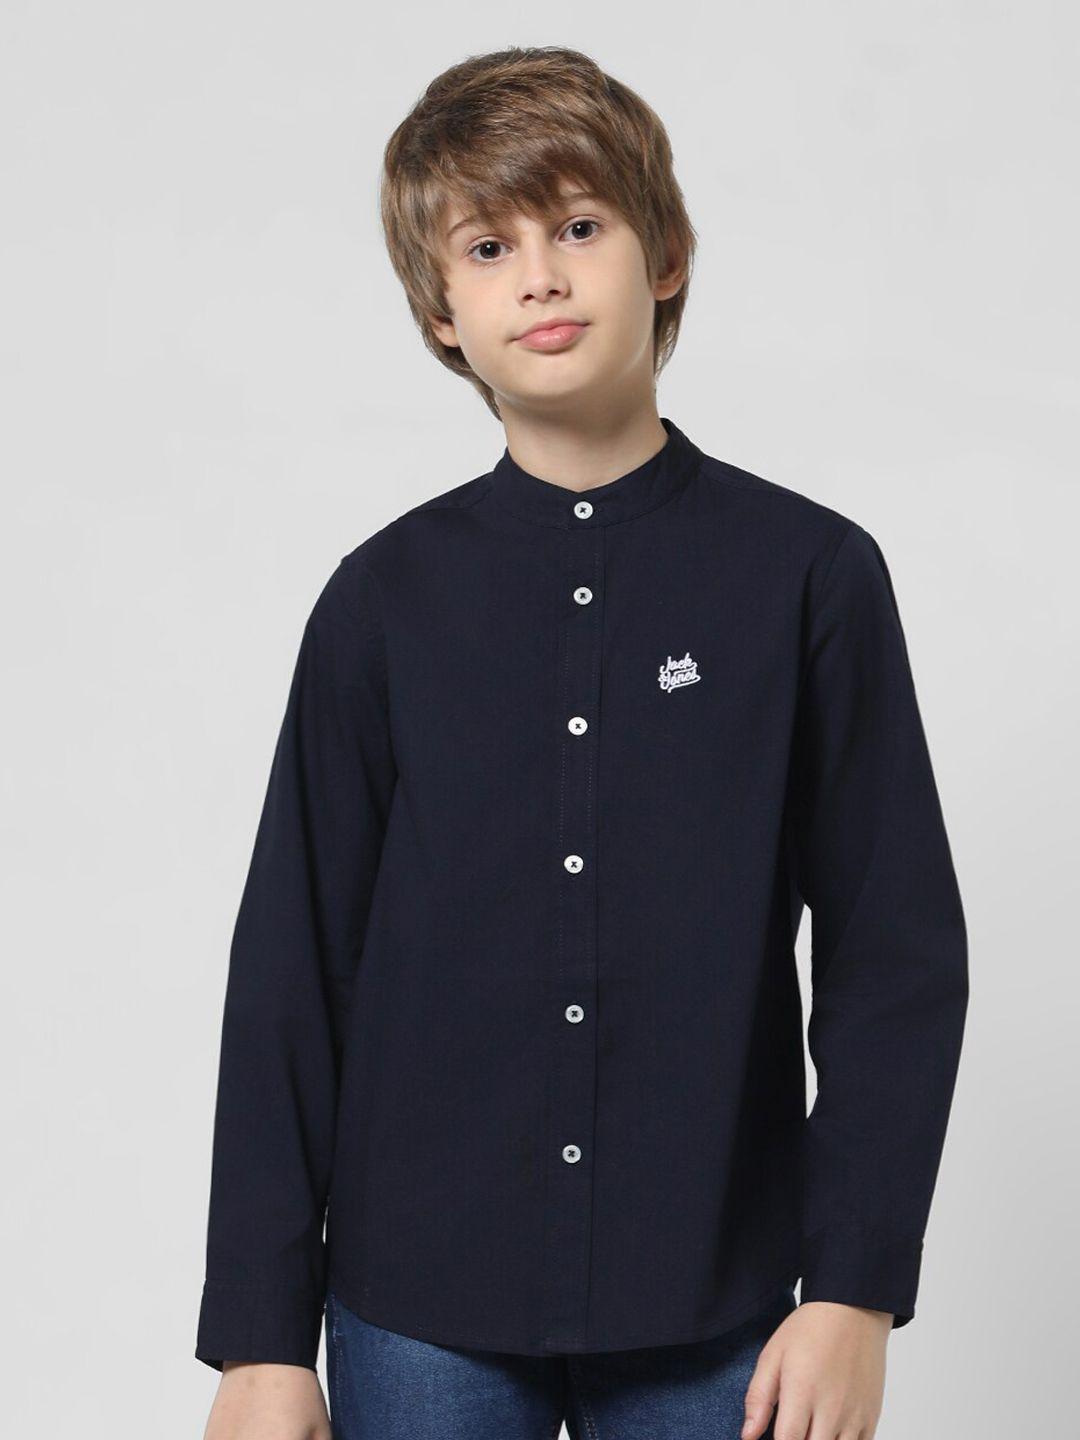 jack & jones junior boys brand logo printed band collar cotton casual shirt